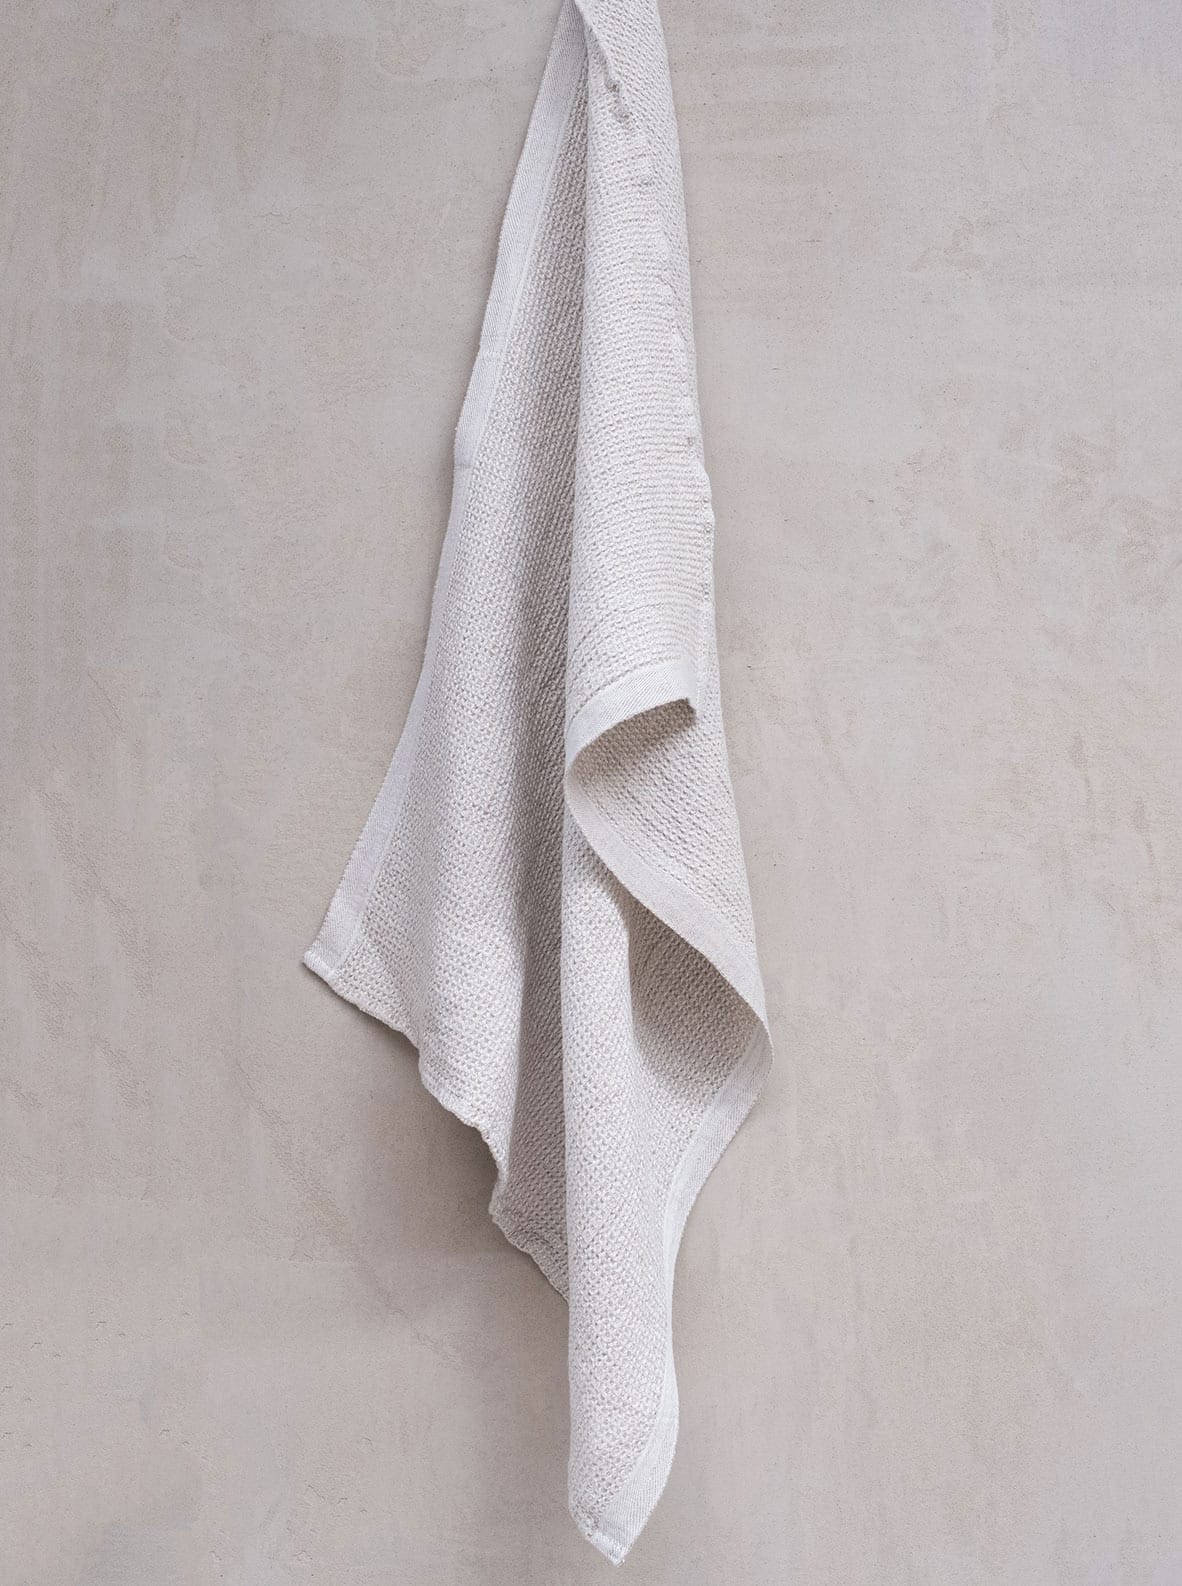 Lapuan Kankurit Koodi hand towel, yellow - linen